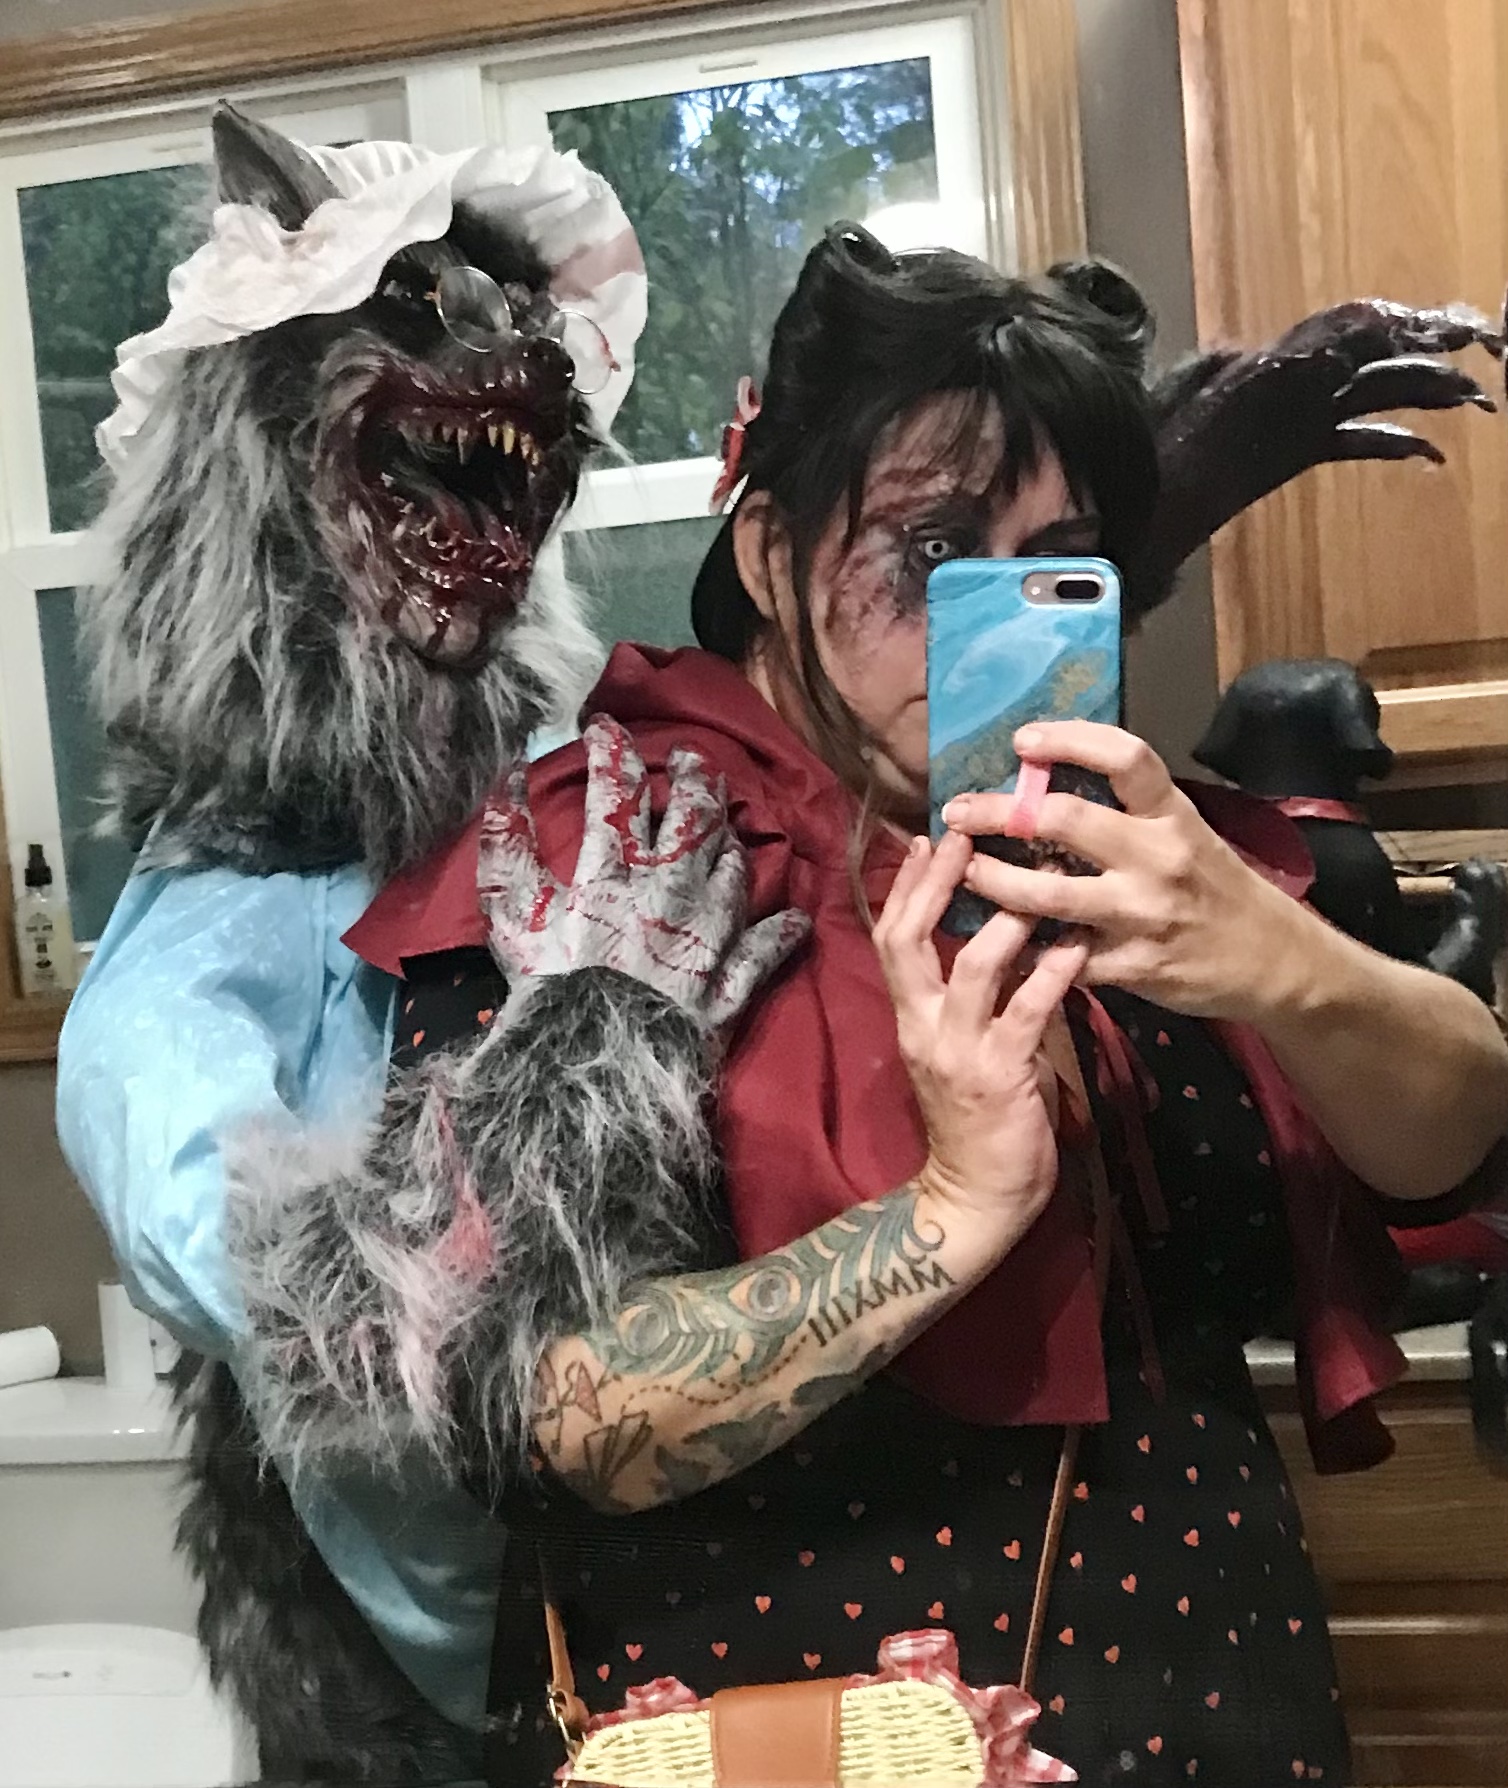 red riding hood werewolf costume